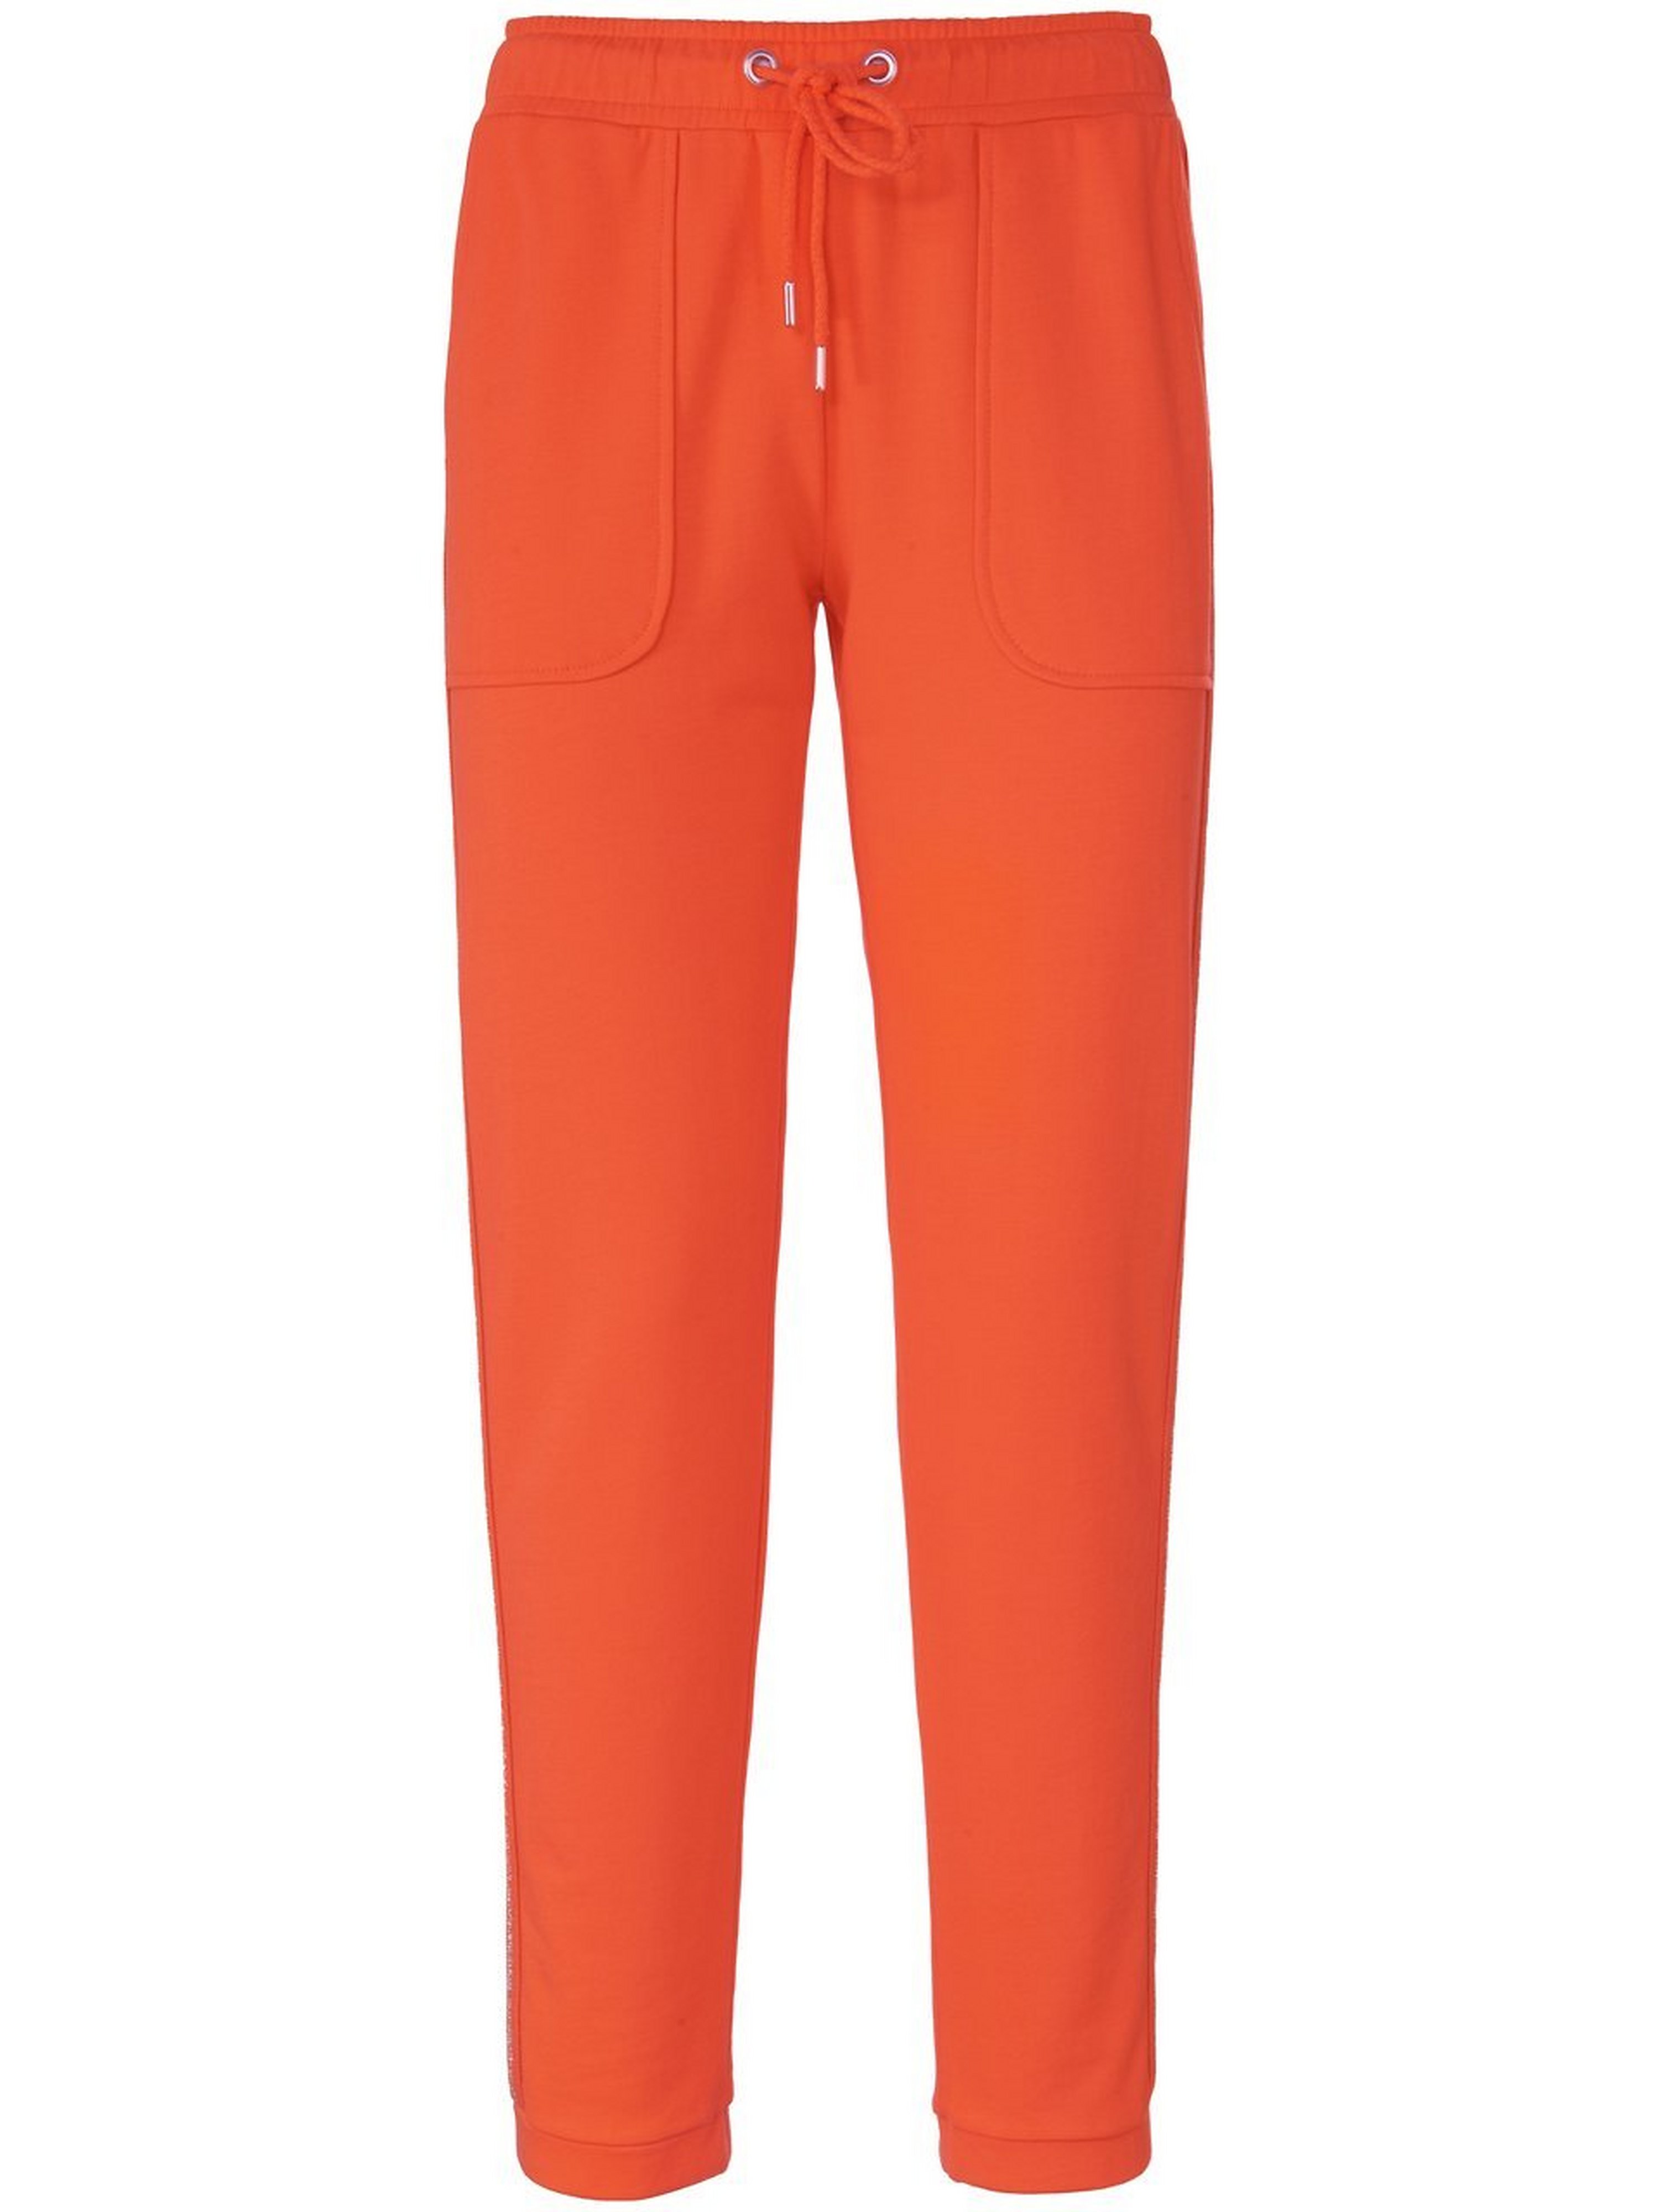 Le pantalon en sweat longueur chevilles  MYBC orange